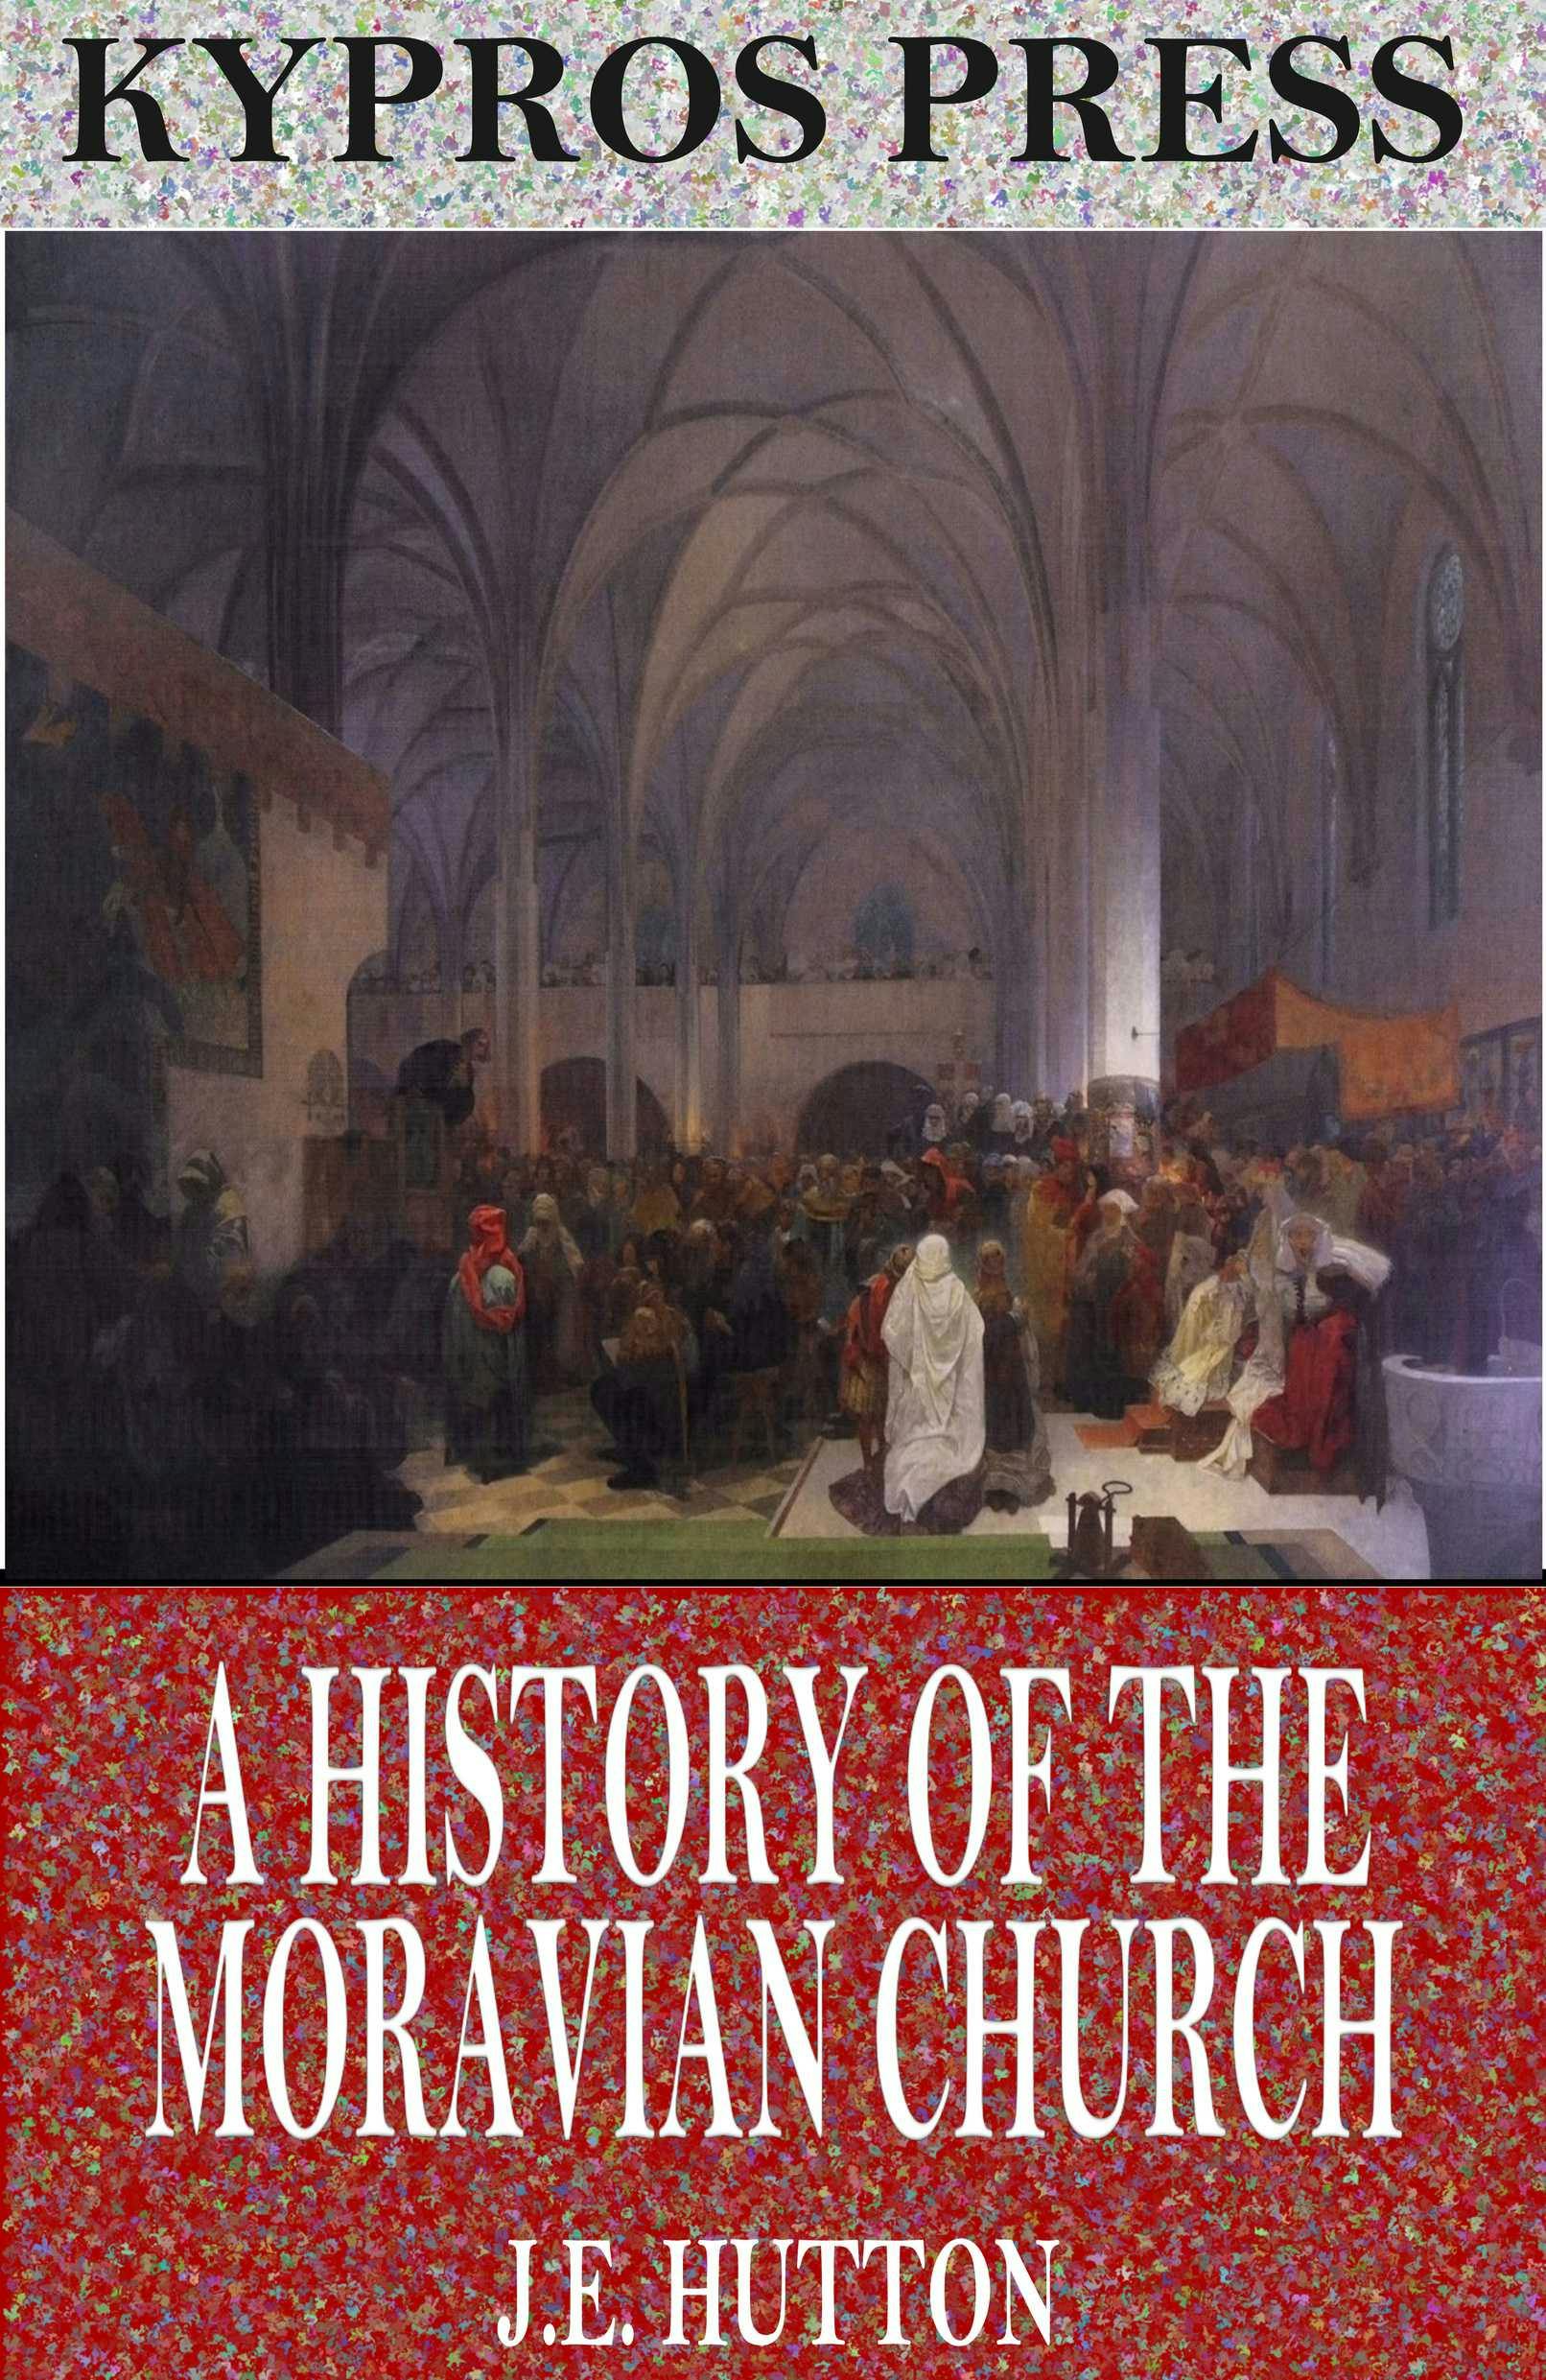 A History of the Moravian Church - J.E. Hutton